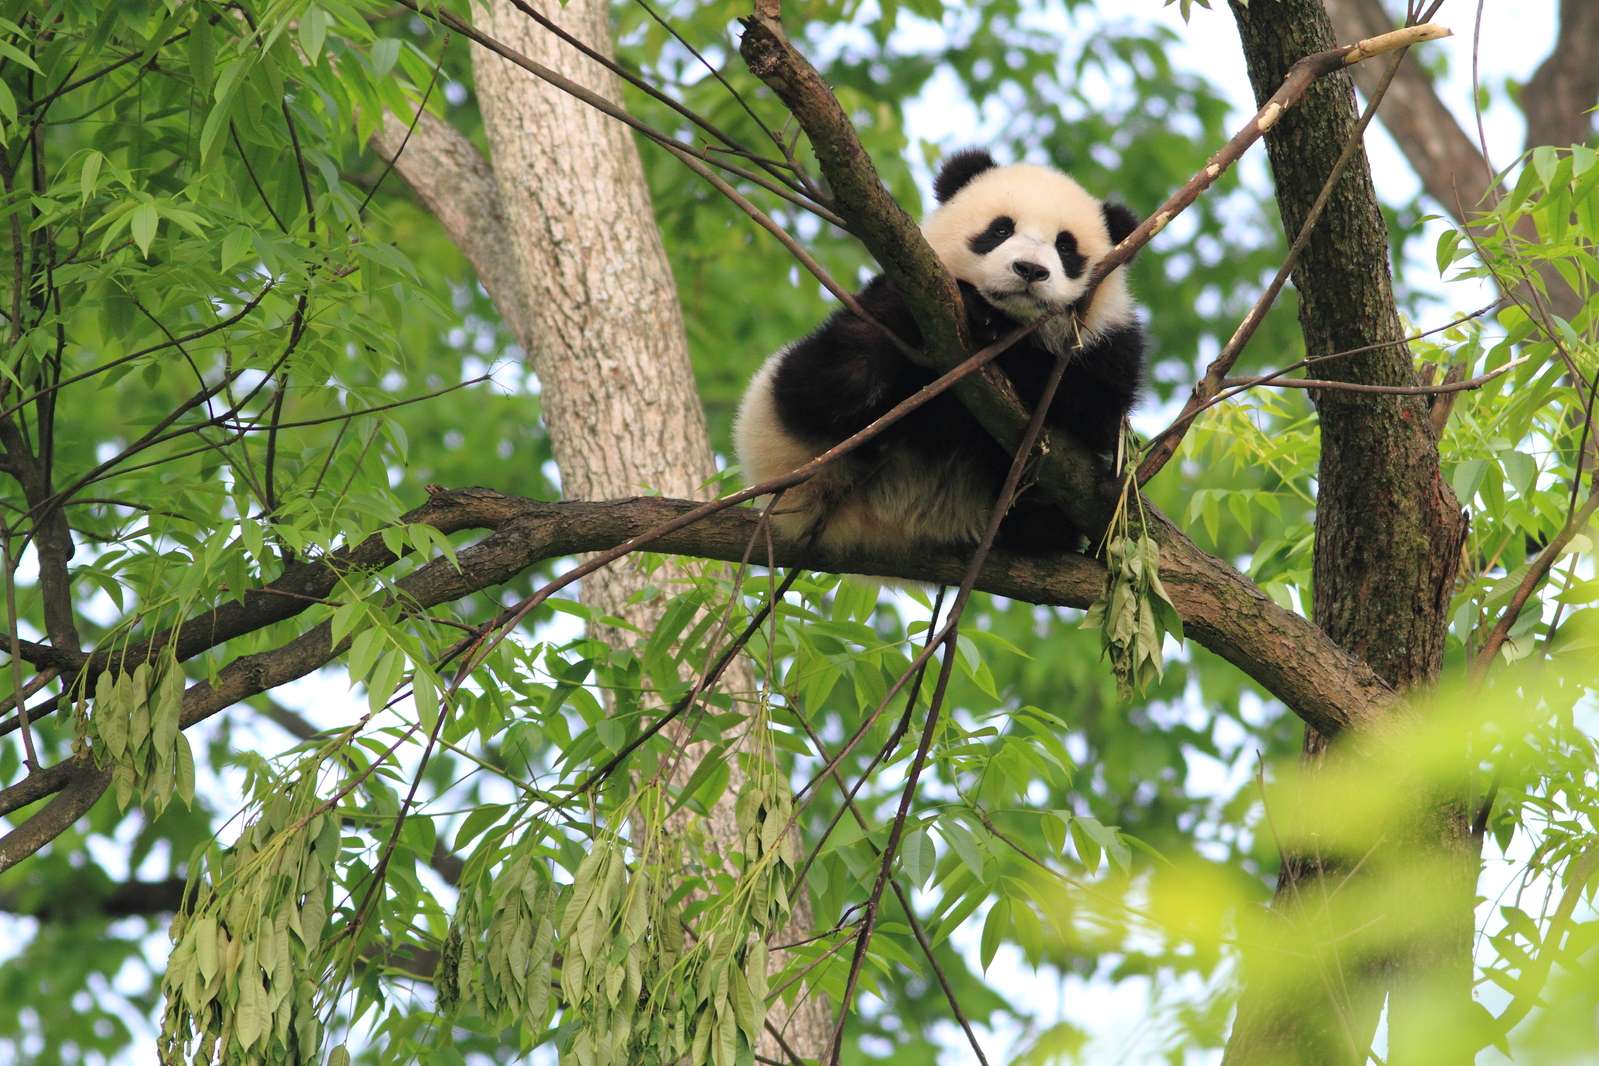 baby panda sitting in tree, cute panda resting on branch, green foliage